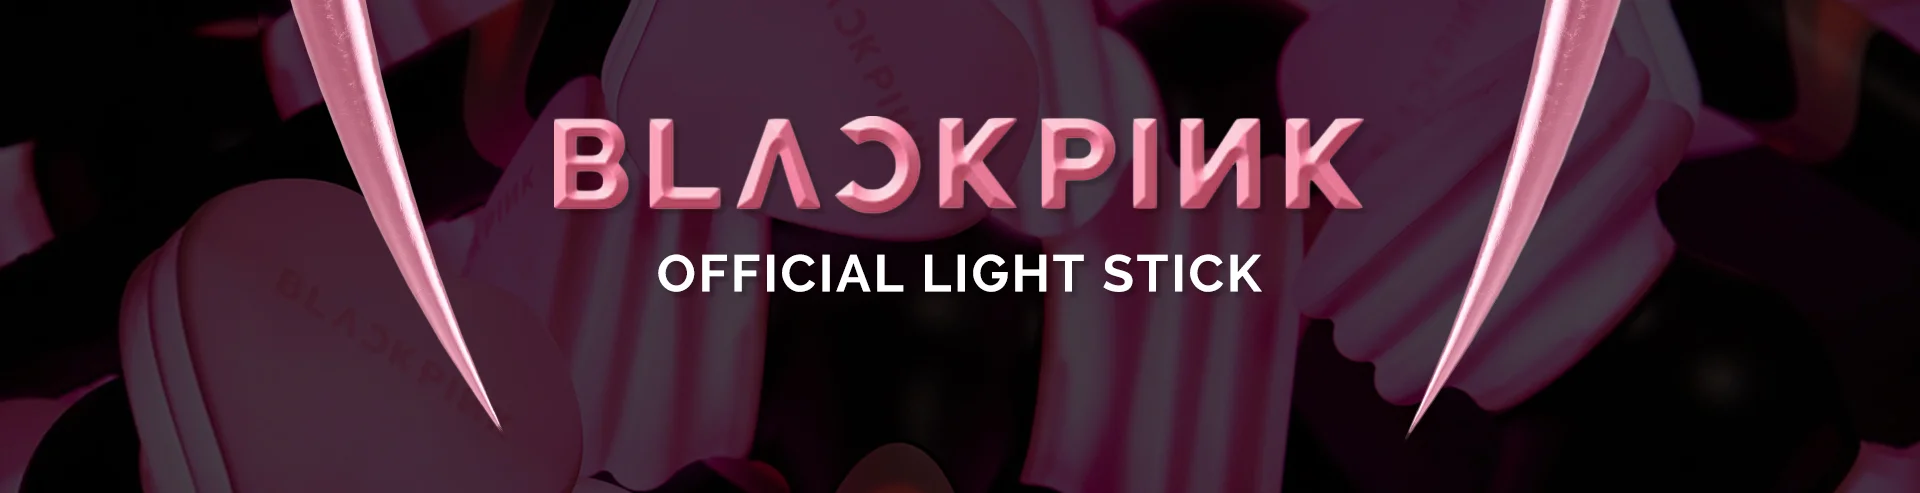 VM-Hero-Blackpink-Official-Light-Stick-1920x493.webp